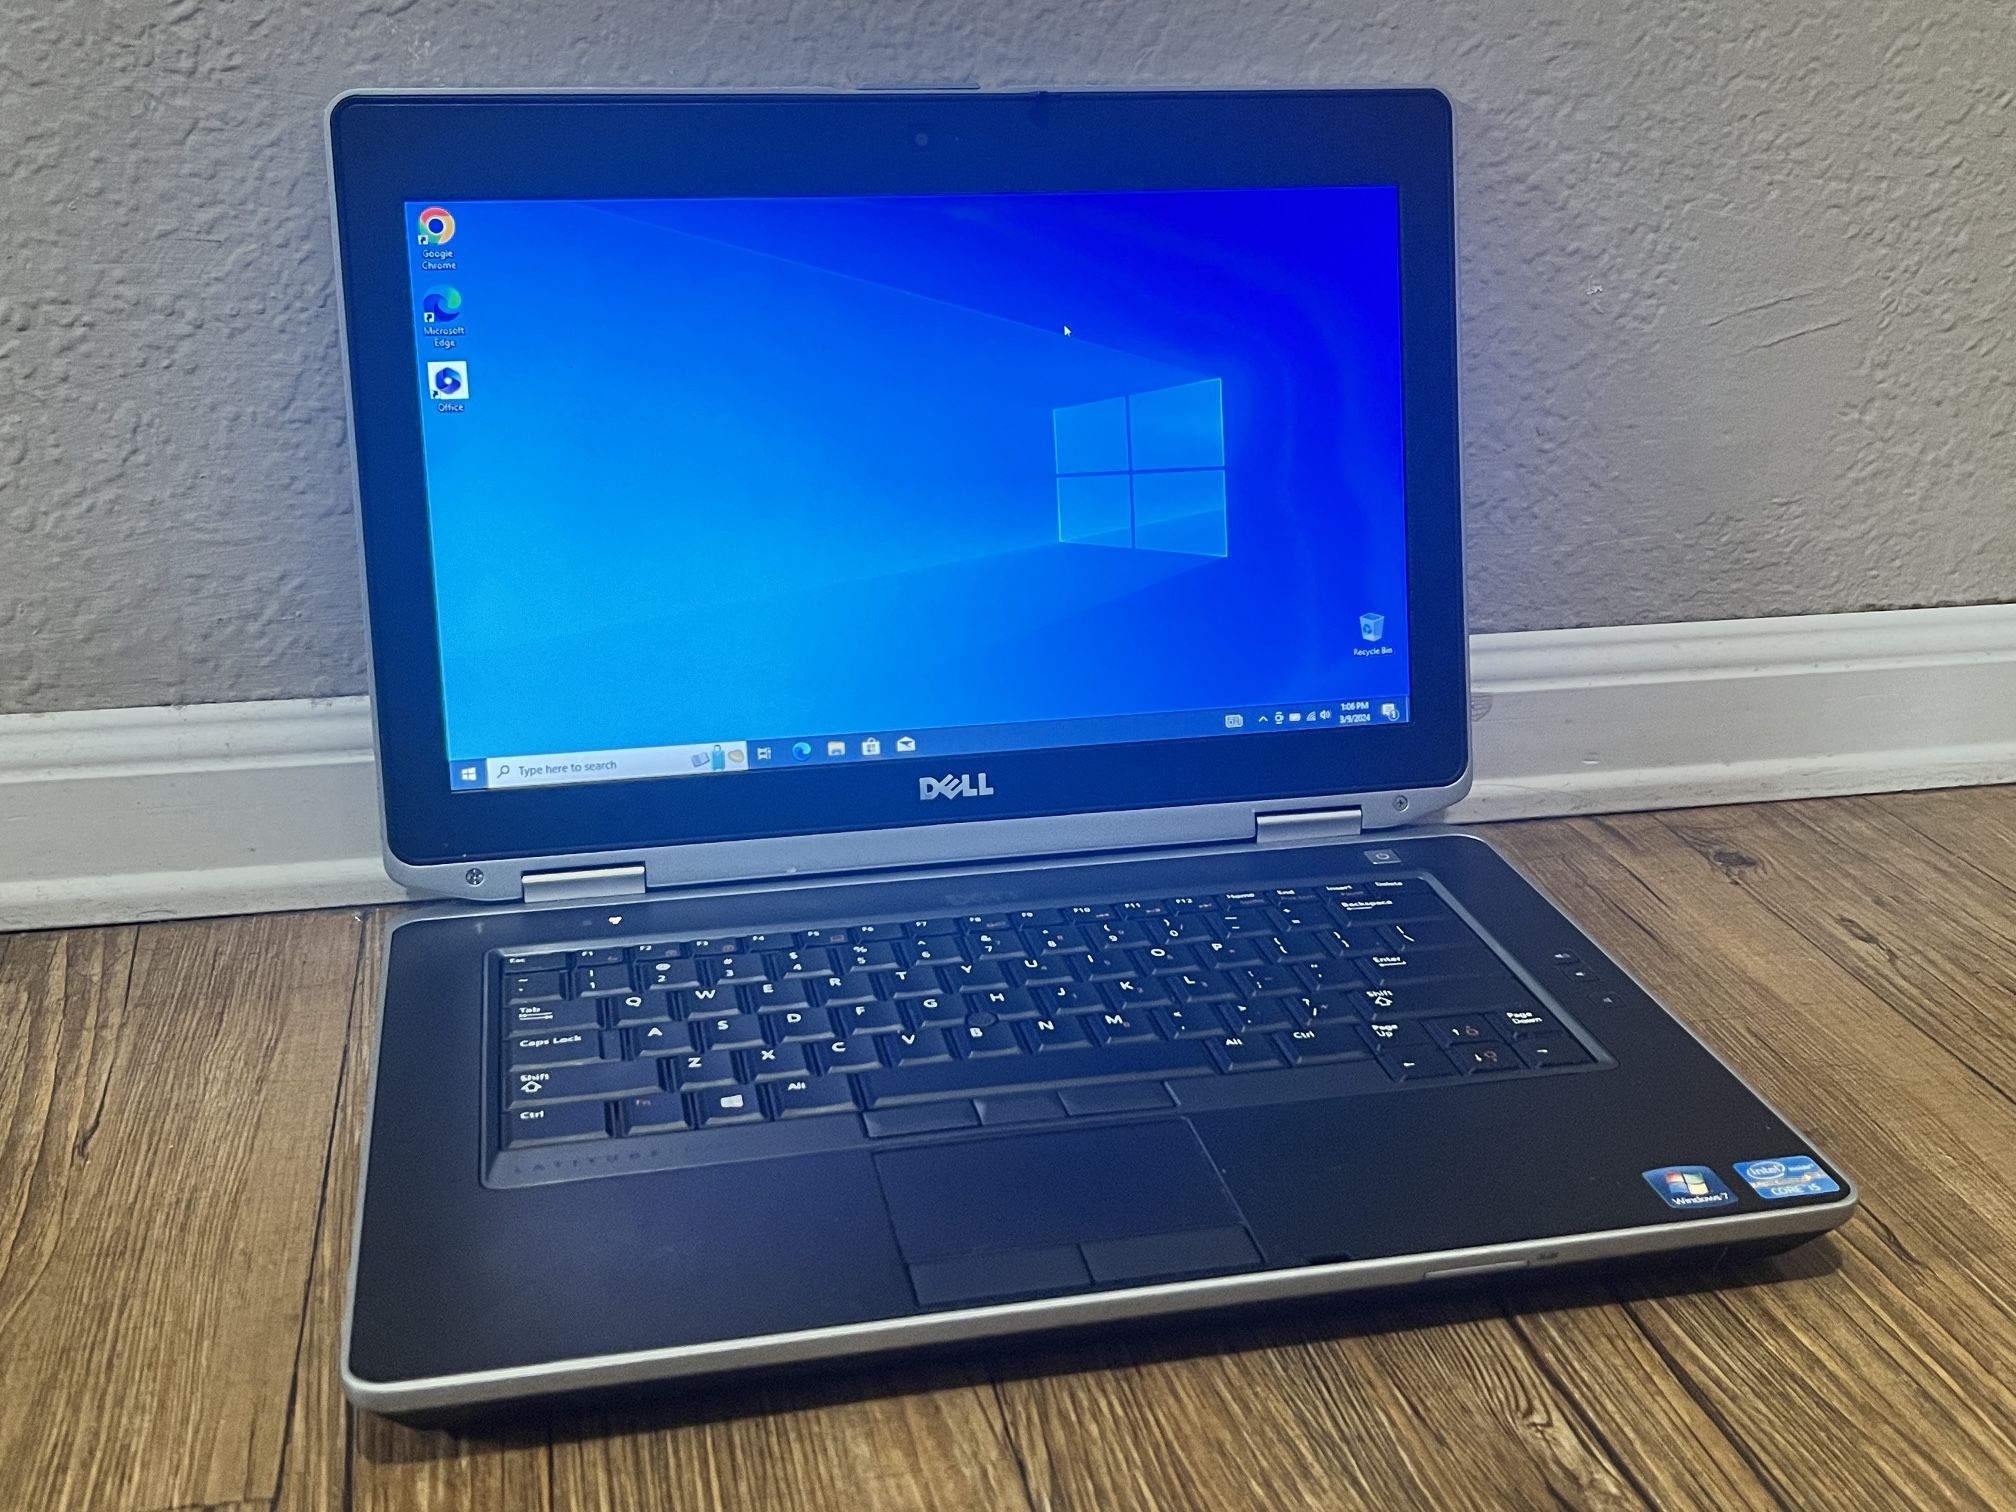 Dell Business Class Laptop 14”, 180gb ssd, 8gb Ram, Win 10, Webcam